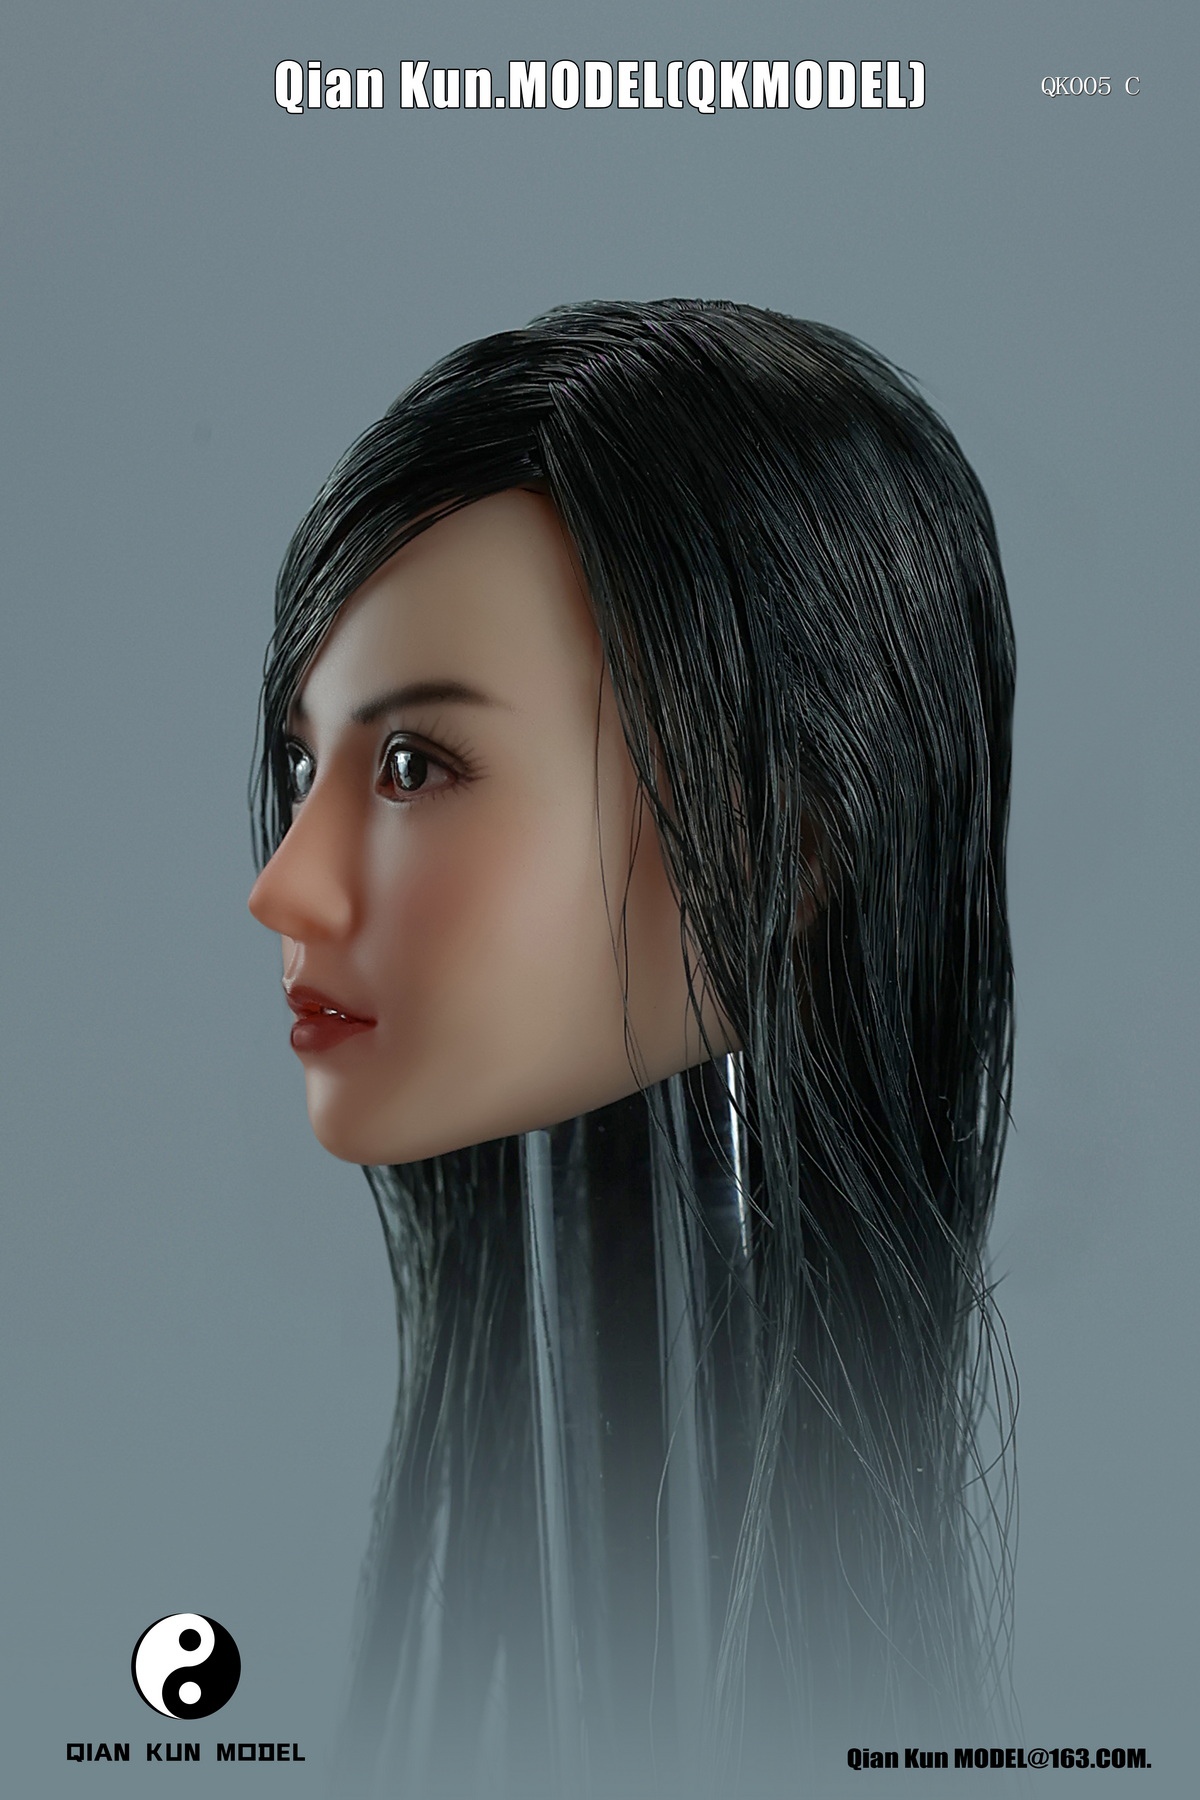 NEW PRODUCT: Qian Kun.Model - Sweet Asian Female Head Sculpture (QK005-A/B/C) 14156